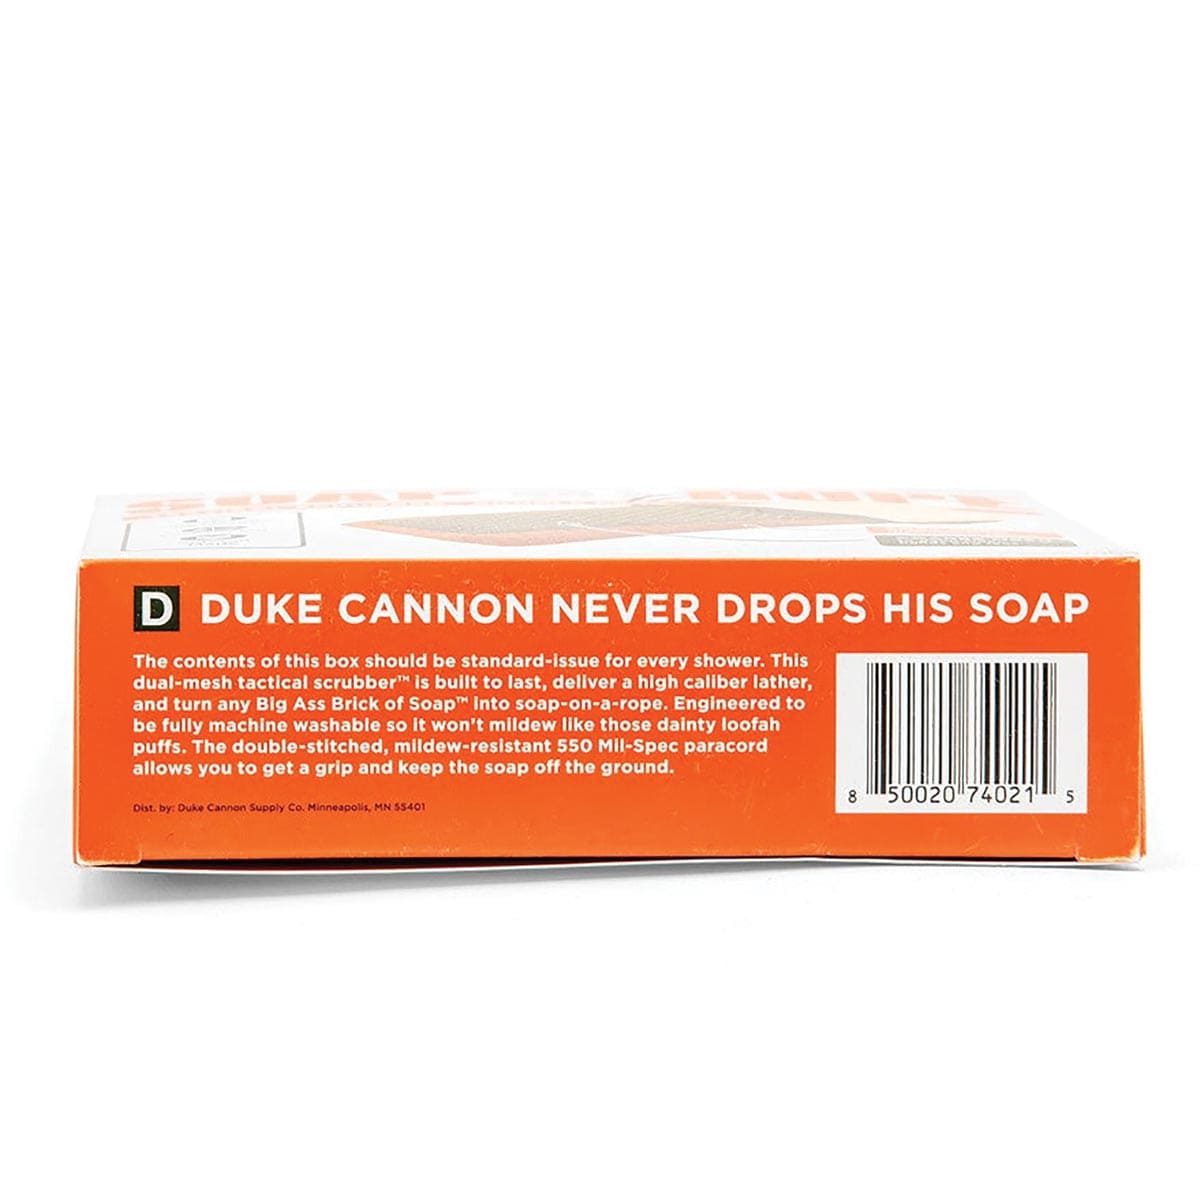 Duke Cannon Soap on a Rope Bundle Pack: Bourbon